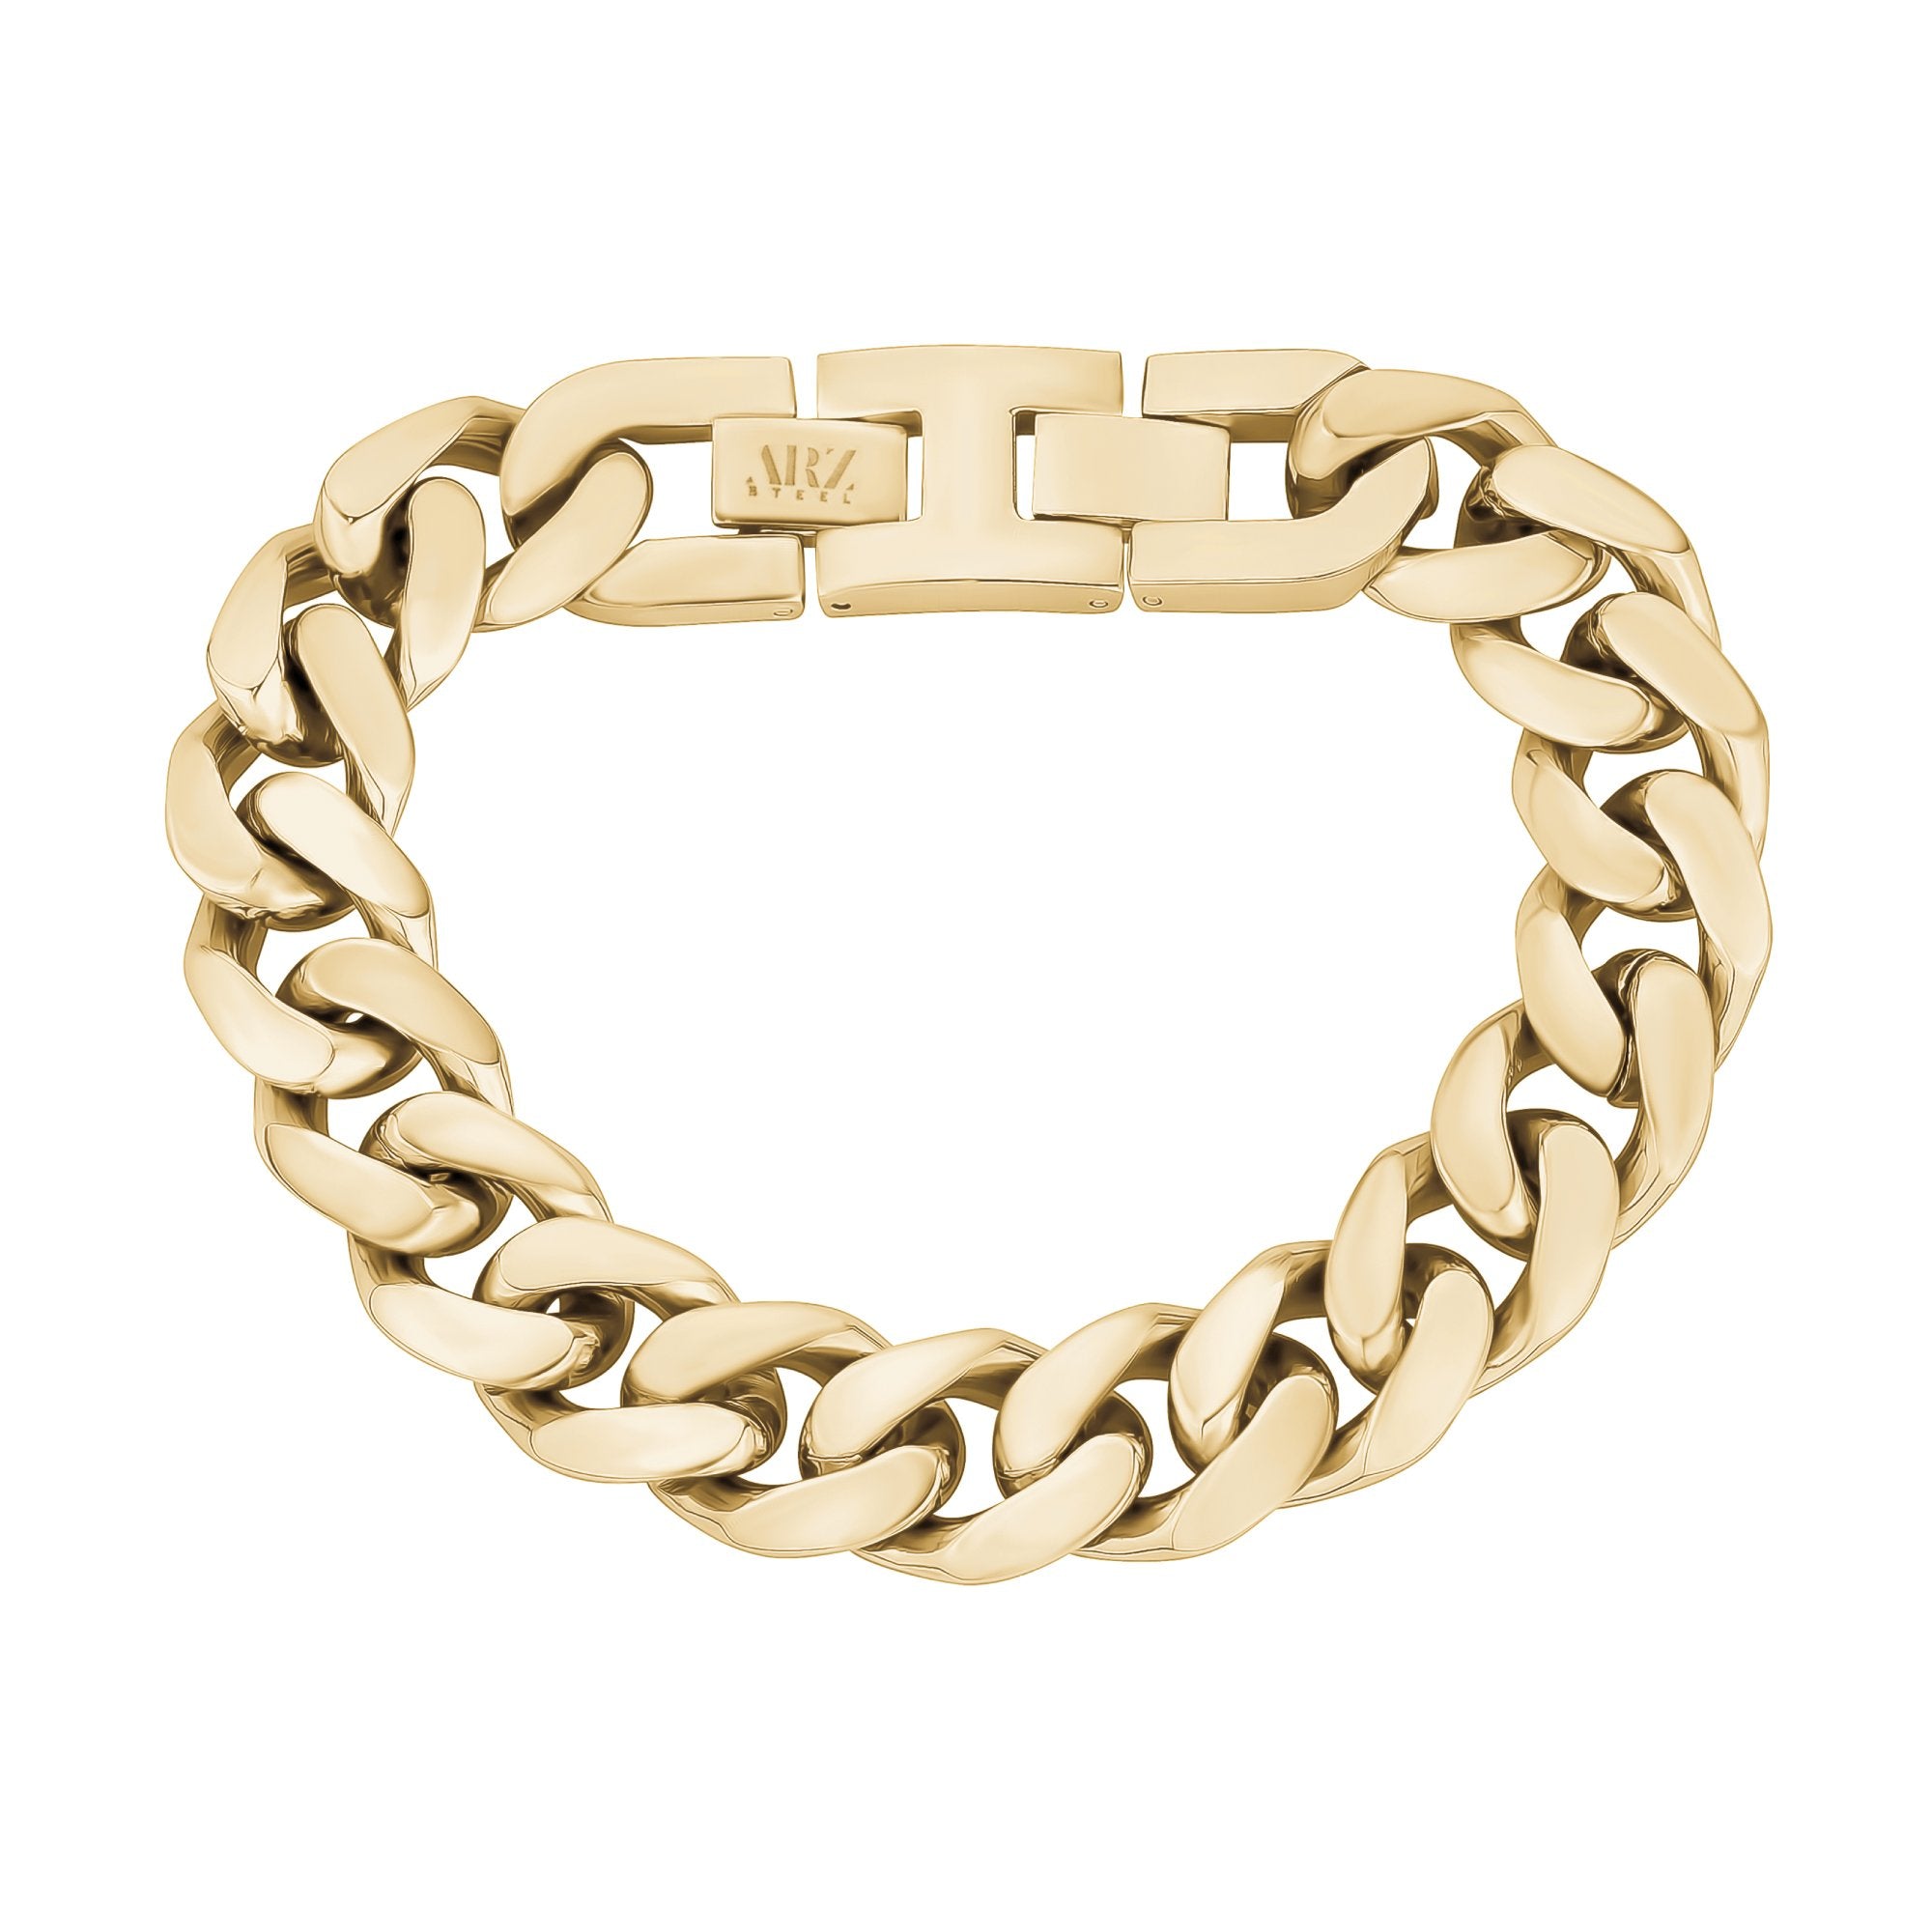 1 Gram Gold Pokal Bracelet For Men, सोने के कंगन - Soni Fashion, Rajkot |  ID: 2849740220797